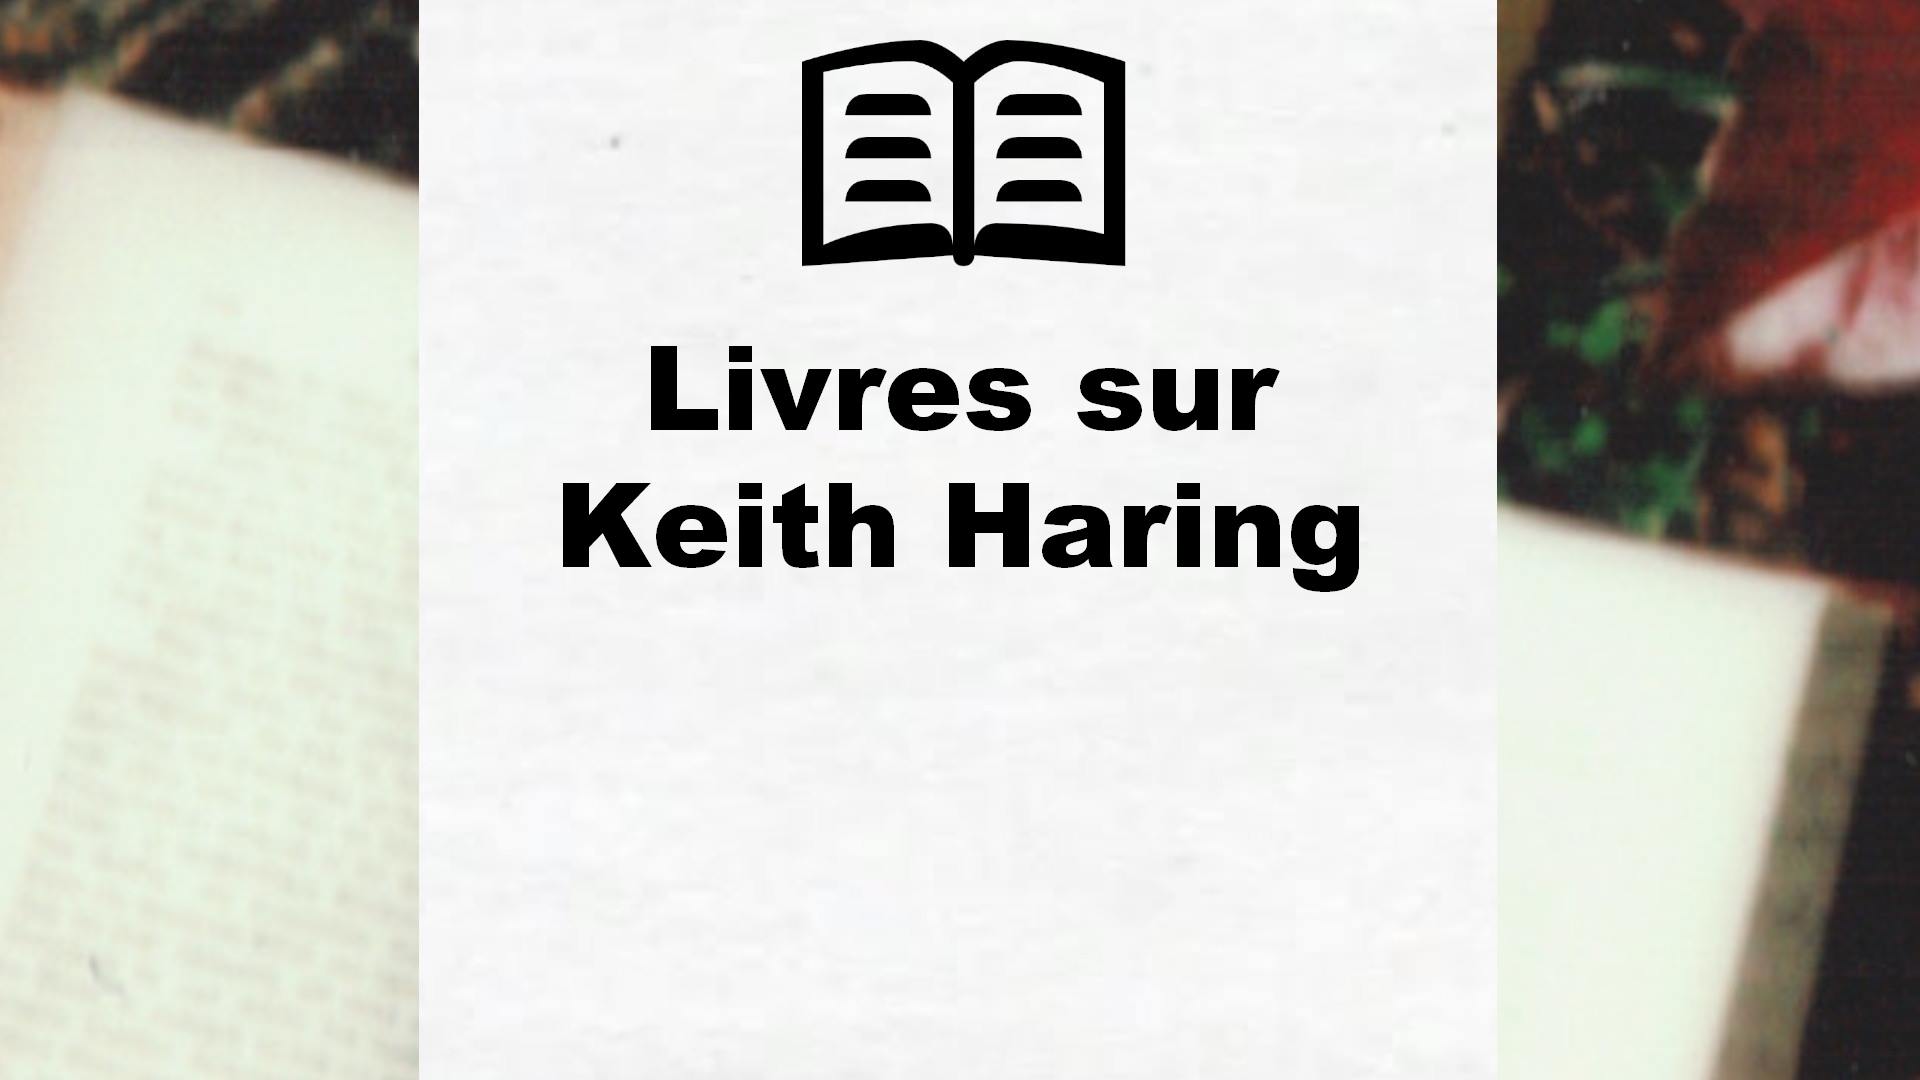 Livres sur Keith Haring